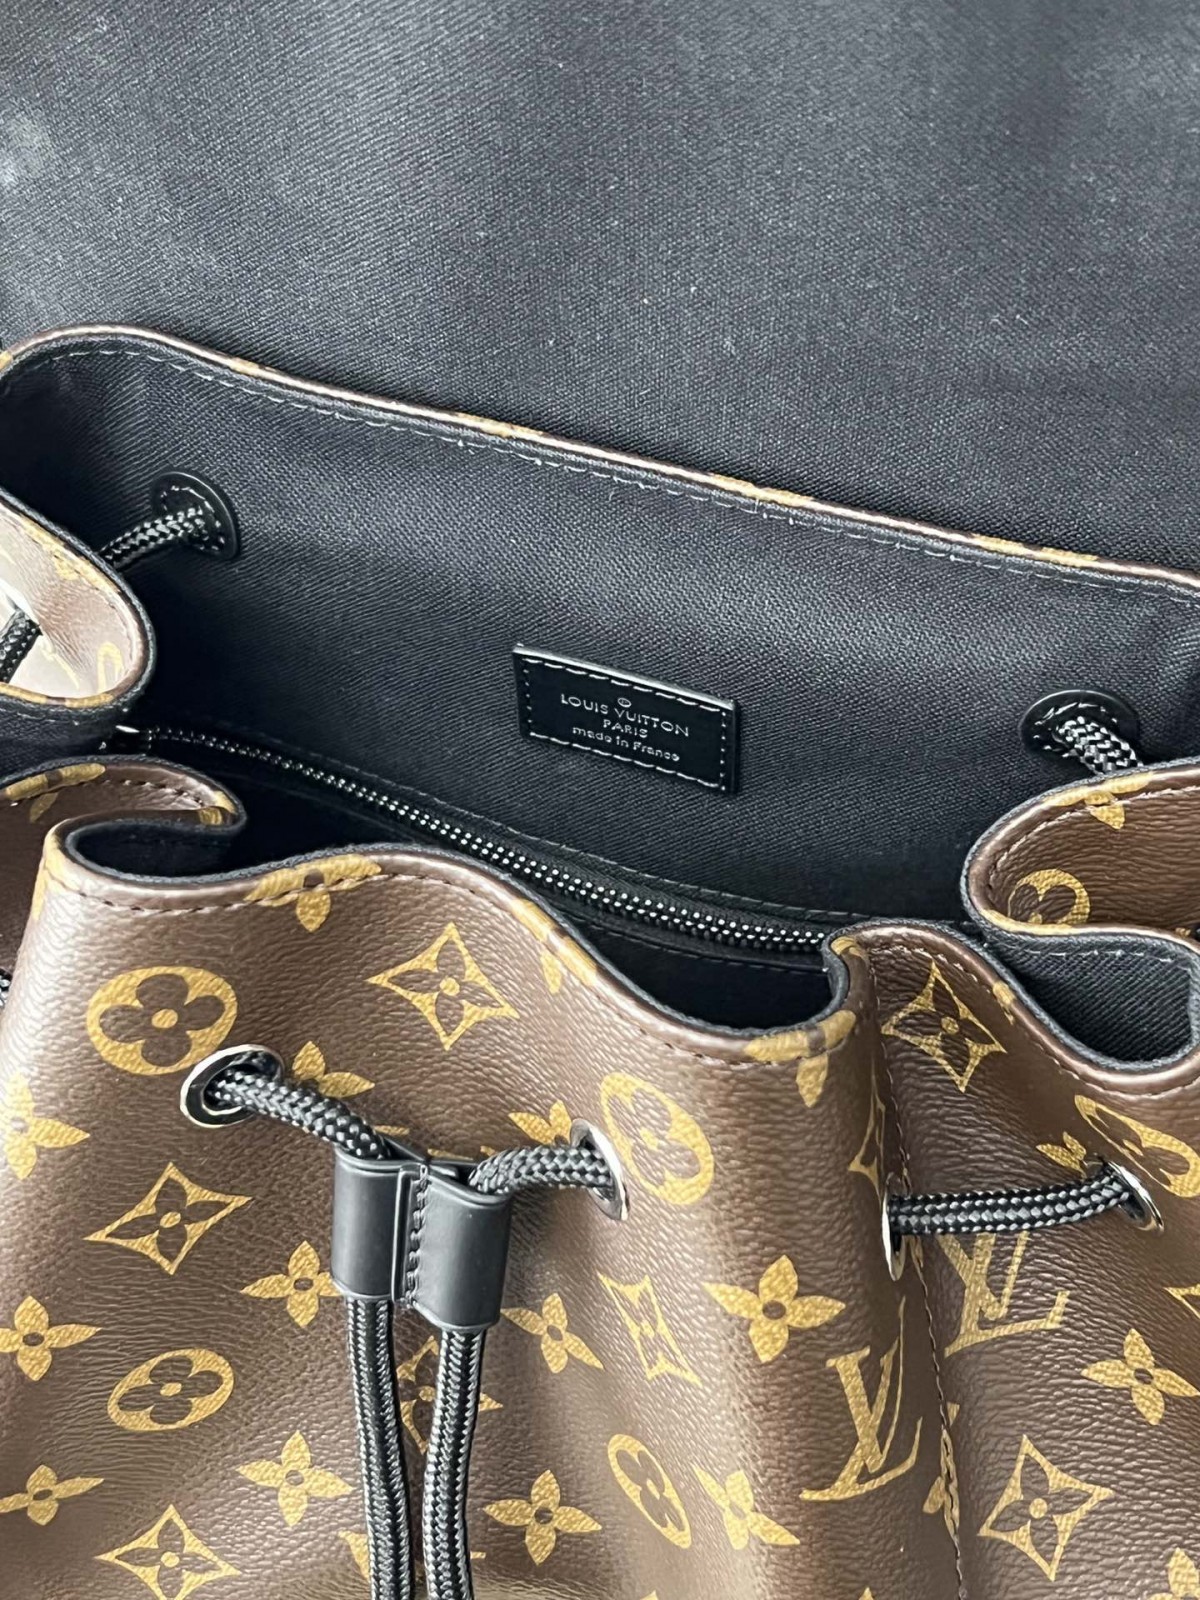 The Louis Vuitton Christopher Backpack: A Remarkable Replication by Shebag Company (2023 Week 43)-Beste kwaliteit nep Louis Vuitton tas online winkel, replica designer tas ru